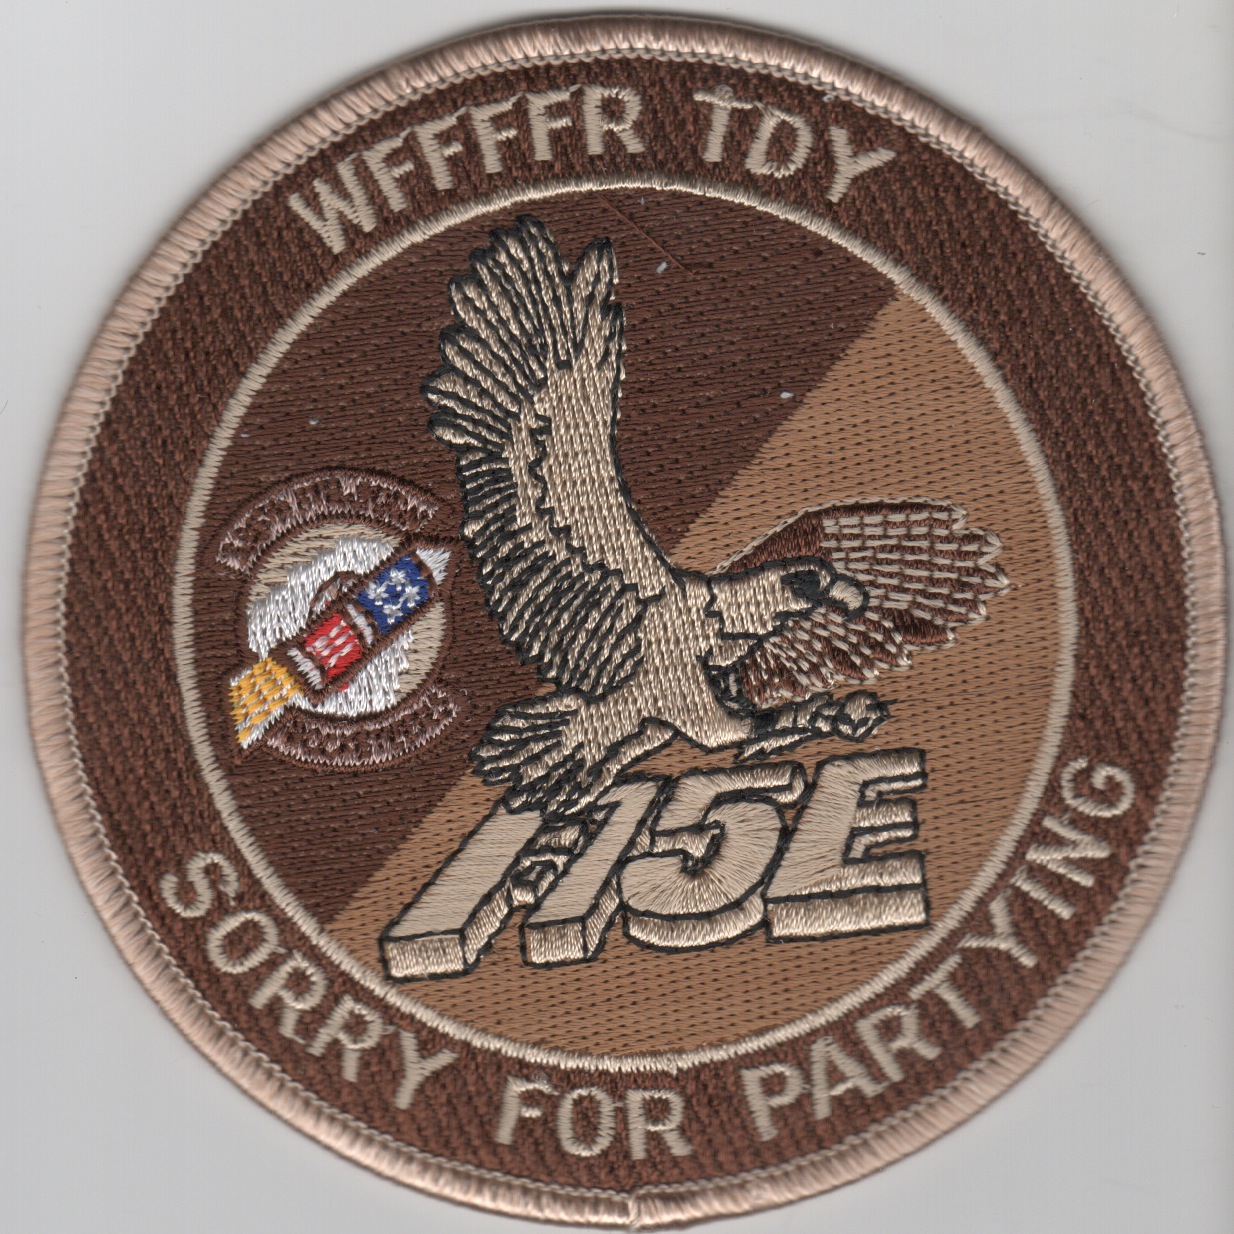 336FS F-15E 'WFFFFR Tinsel' Patch (Desert)